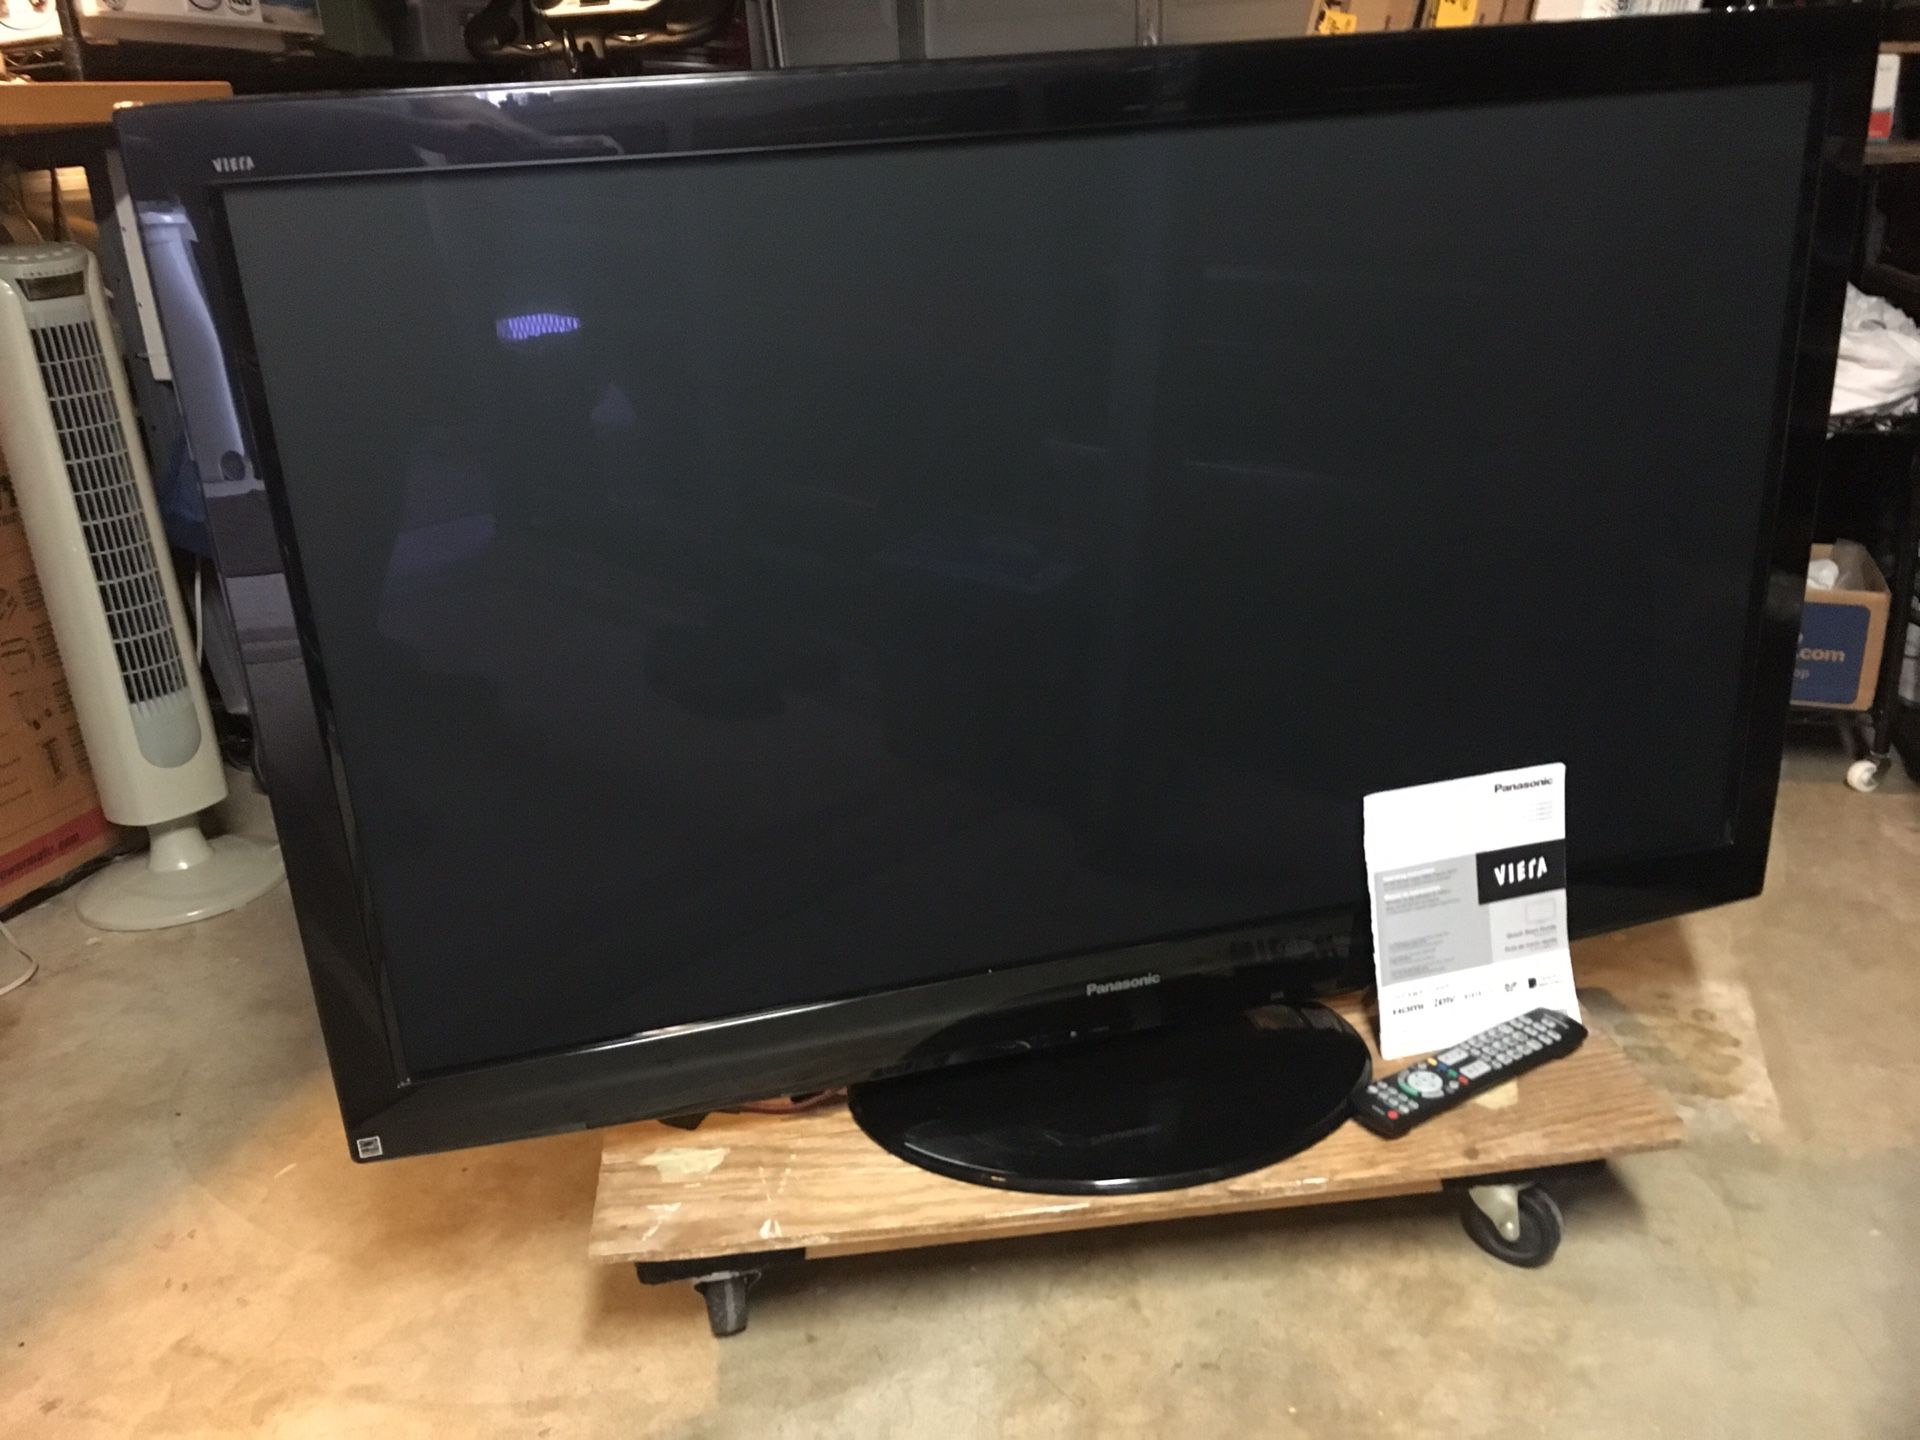 50 inch Plasma Flat panel Panasonic TV